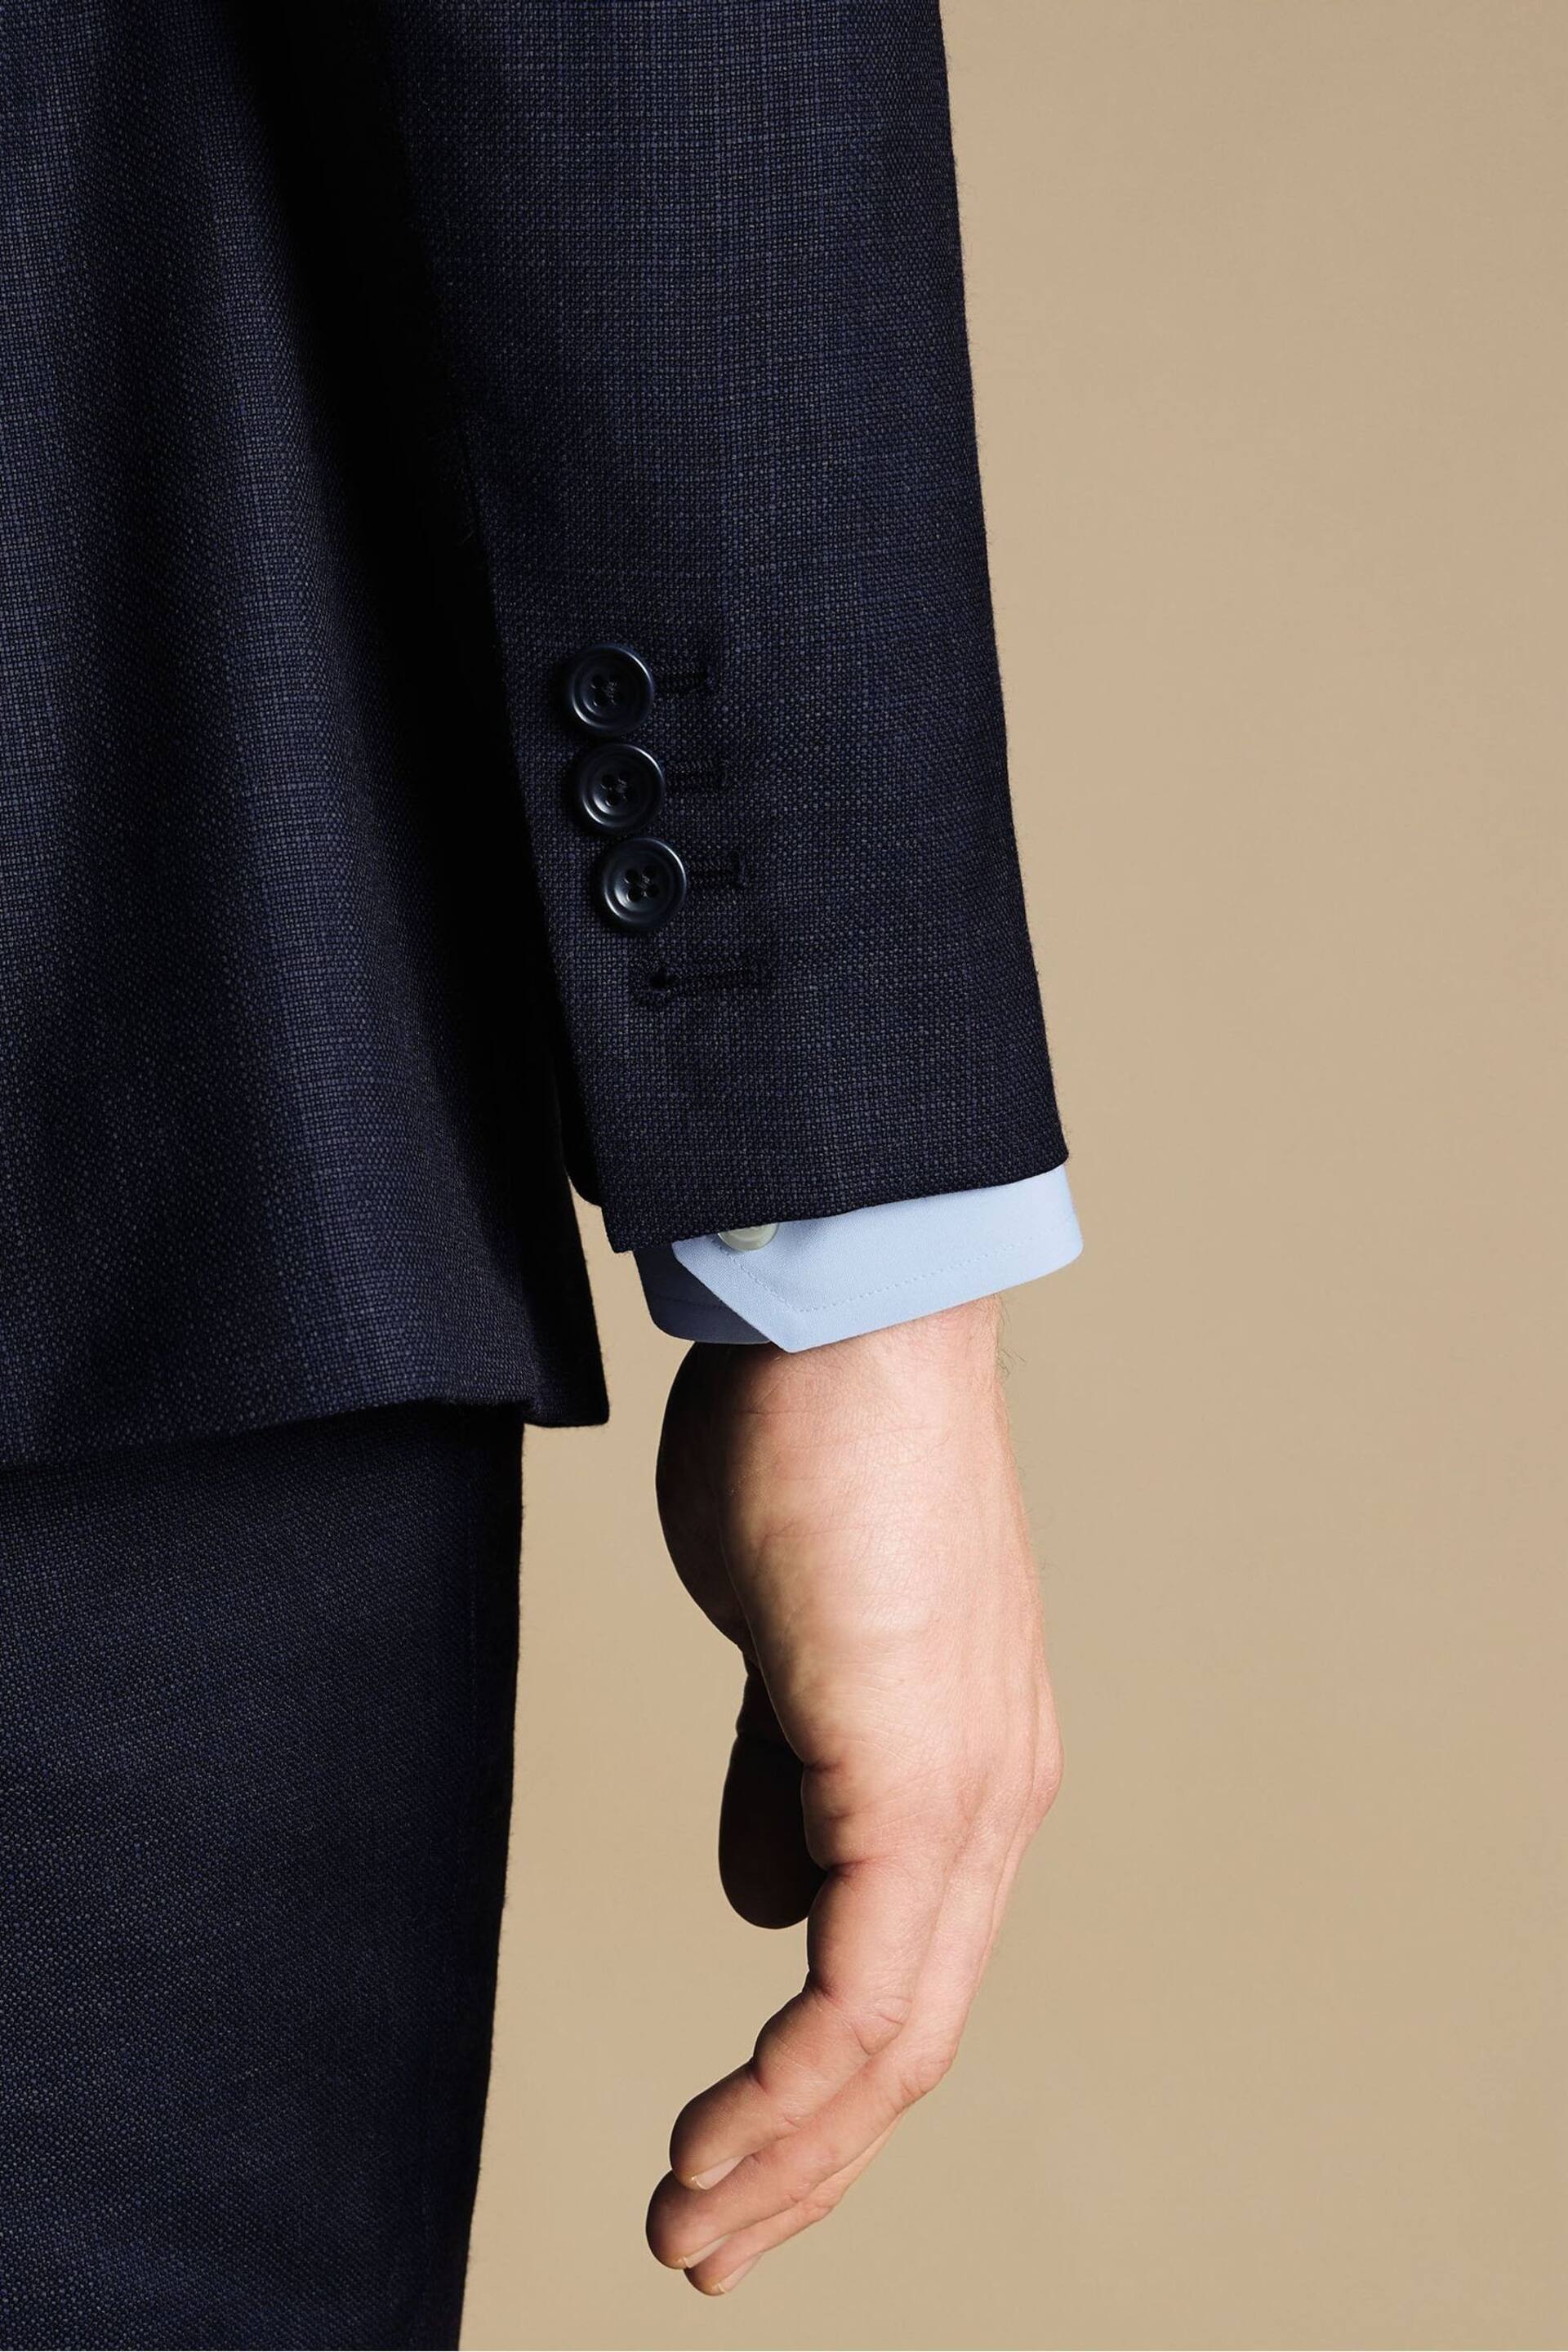 Charles Tyrwhitt Navy Blue Slim Fit Italian Luxury Suit: Jacket - Image 4 of 5